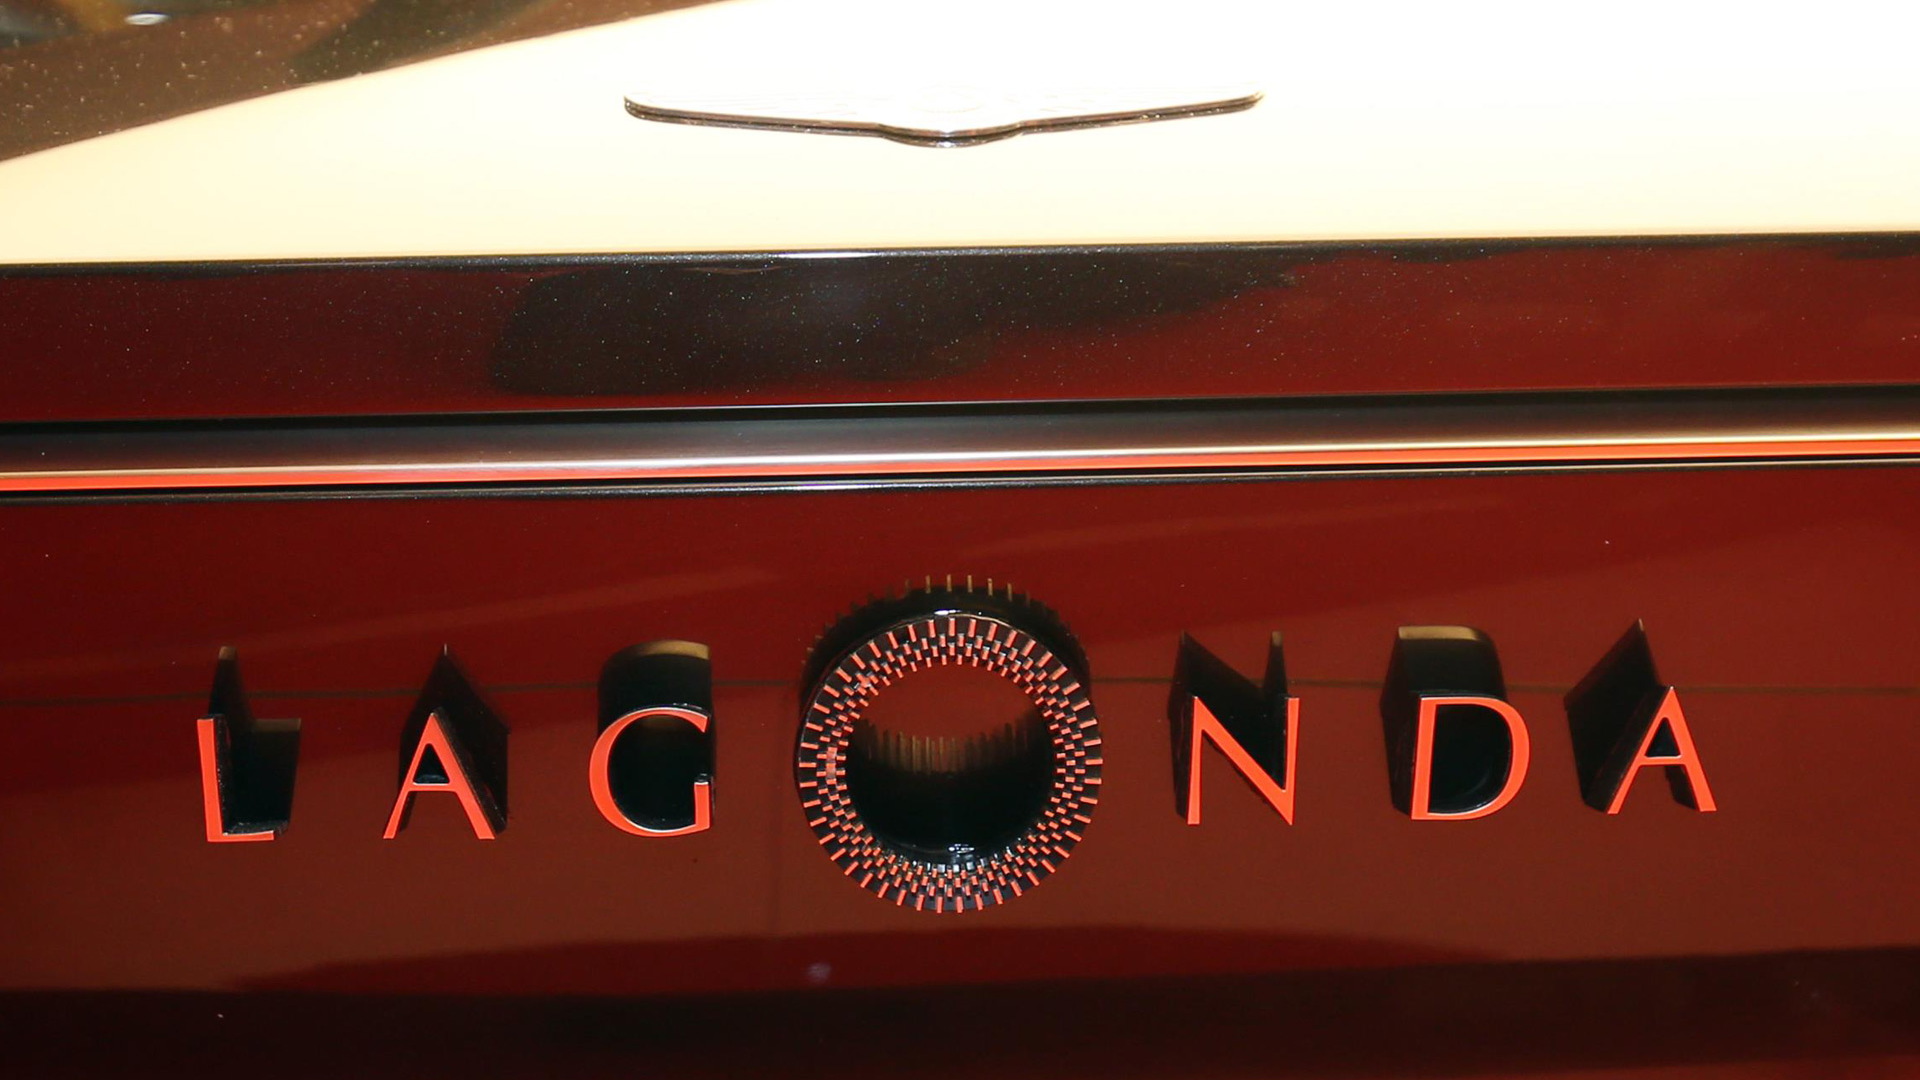 Lagonda Vision concept